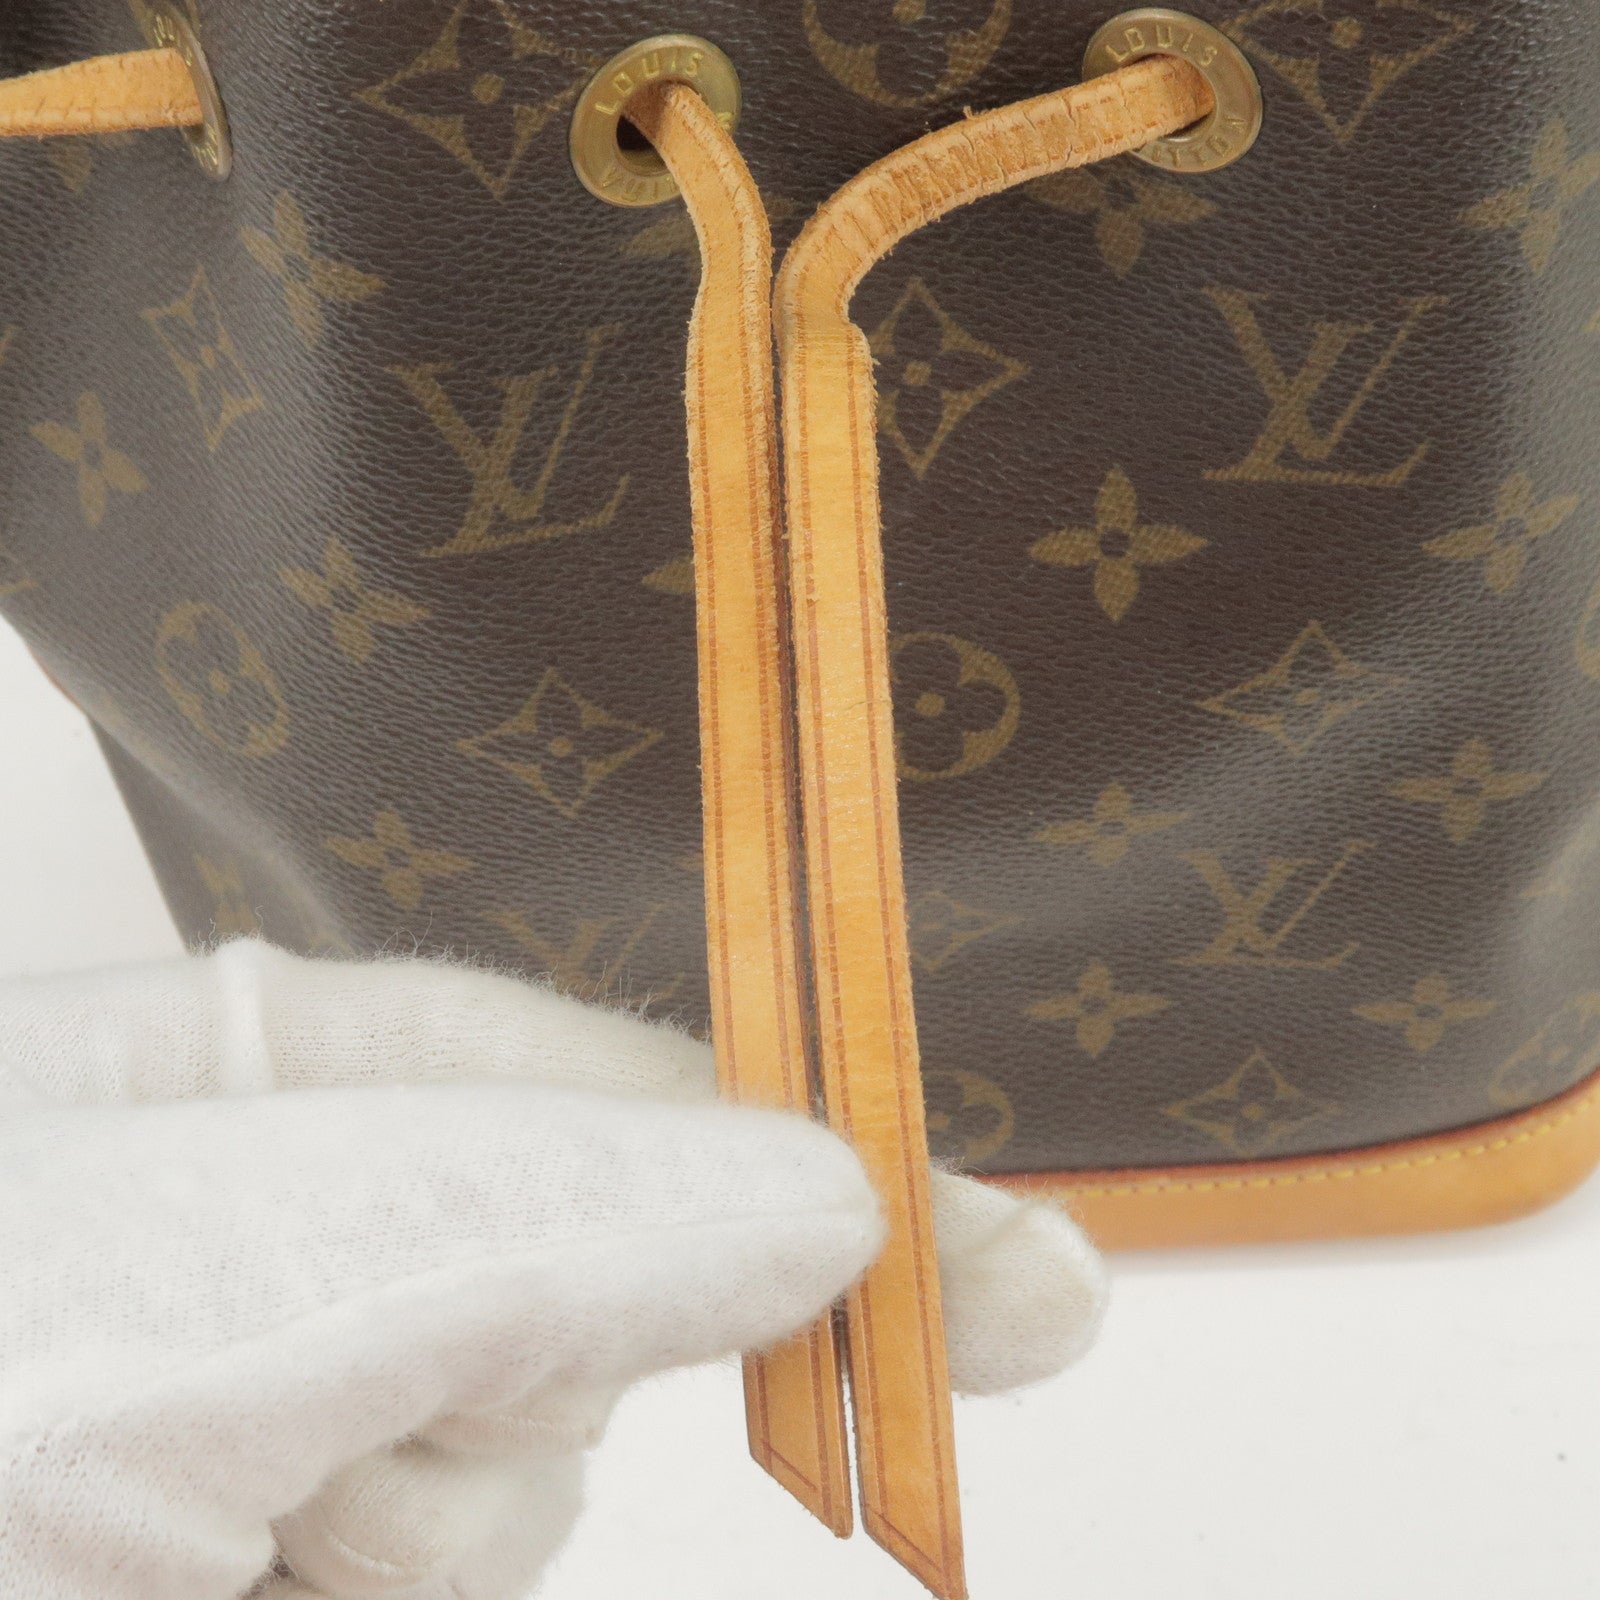 Louis Vuitton, Bags, Louis Vuitton Mahina Selene Pm Noir